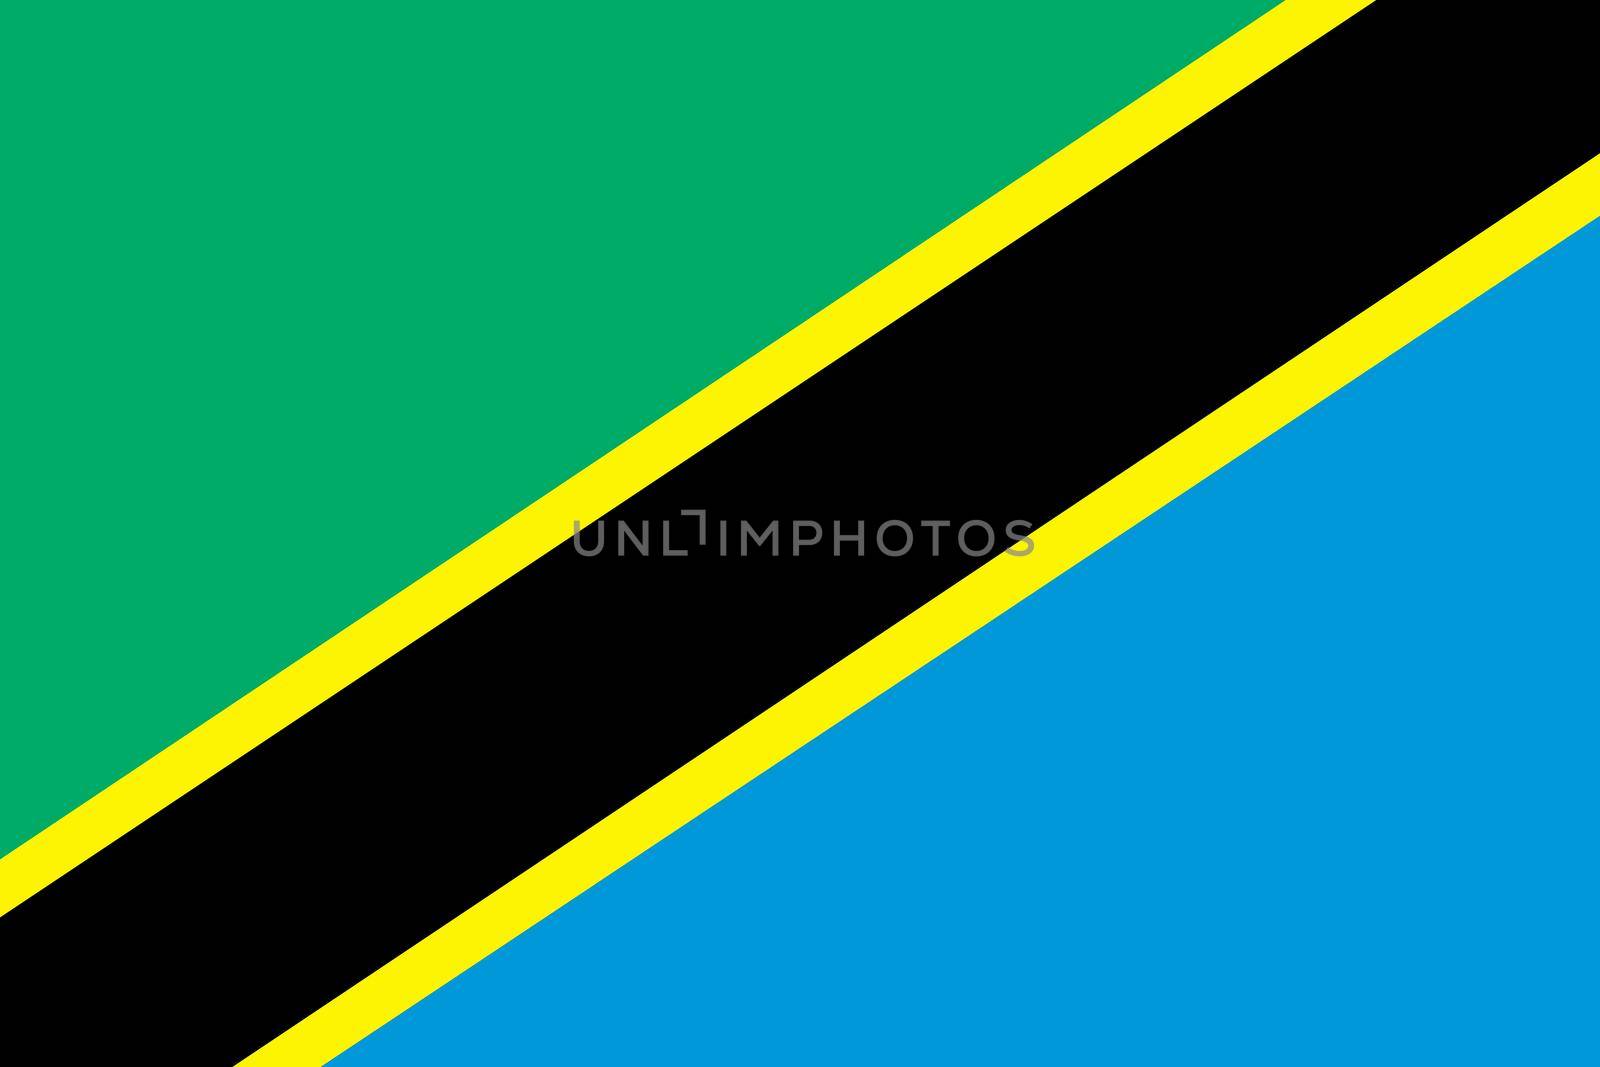 A Tanzania Flag blue black yellow horizontal stripe green blue background illustration